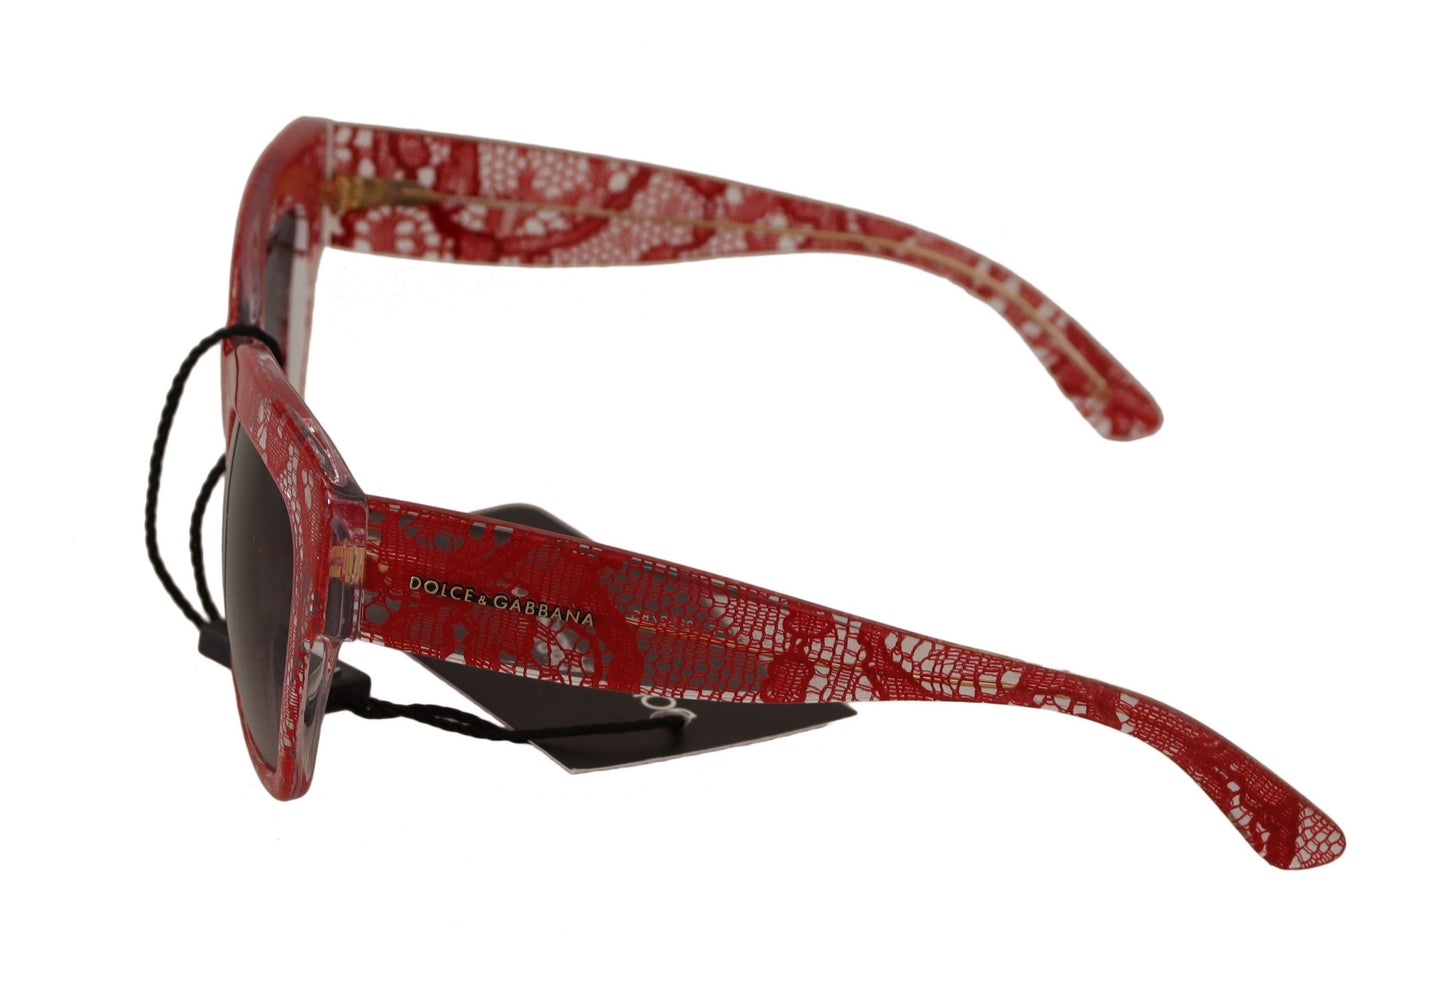 Dolce & Gabbana Red Lace Acetat Rechteck Shades Sonnenbrille